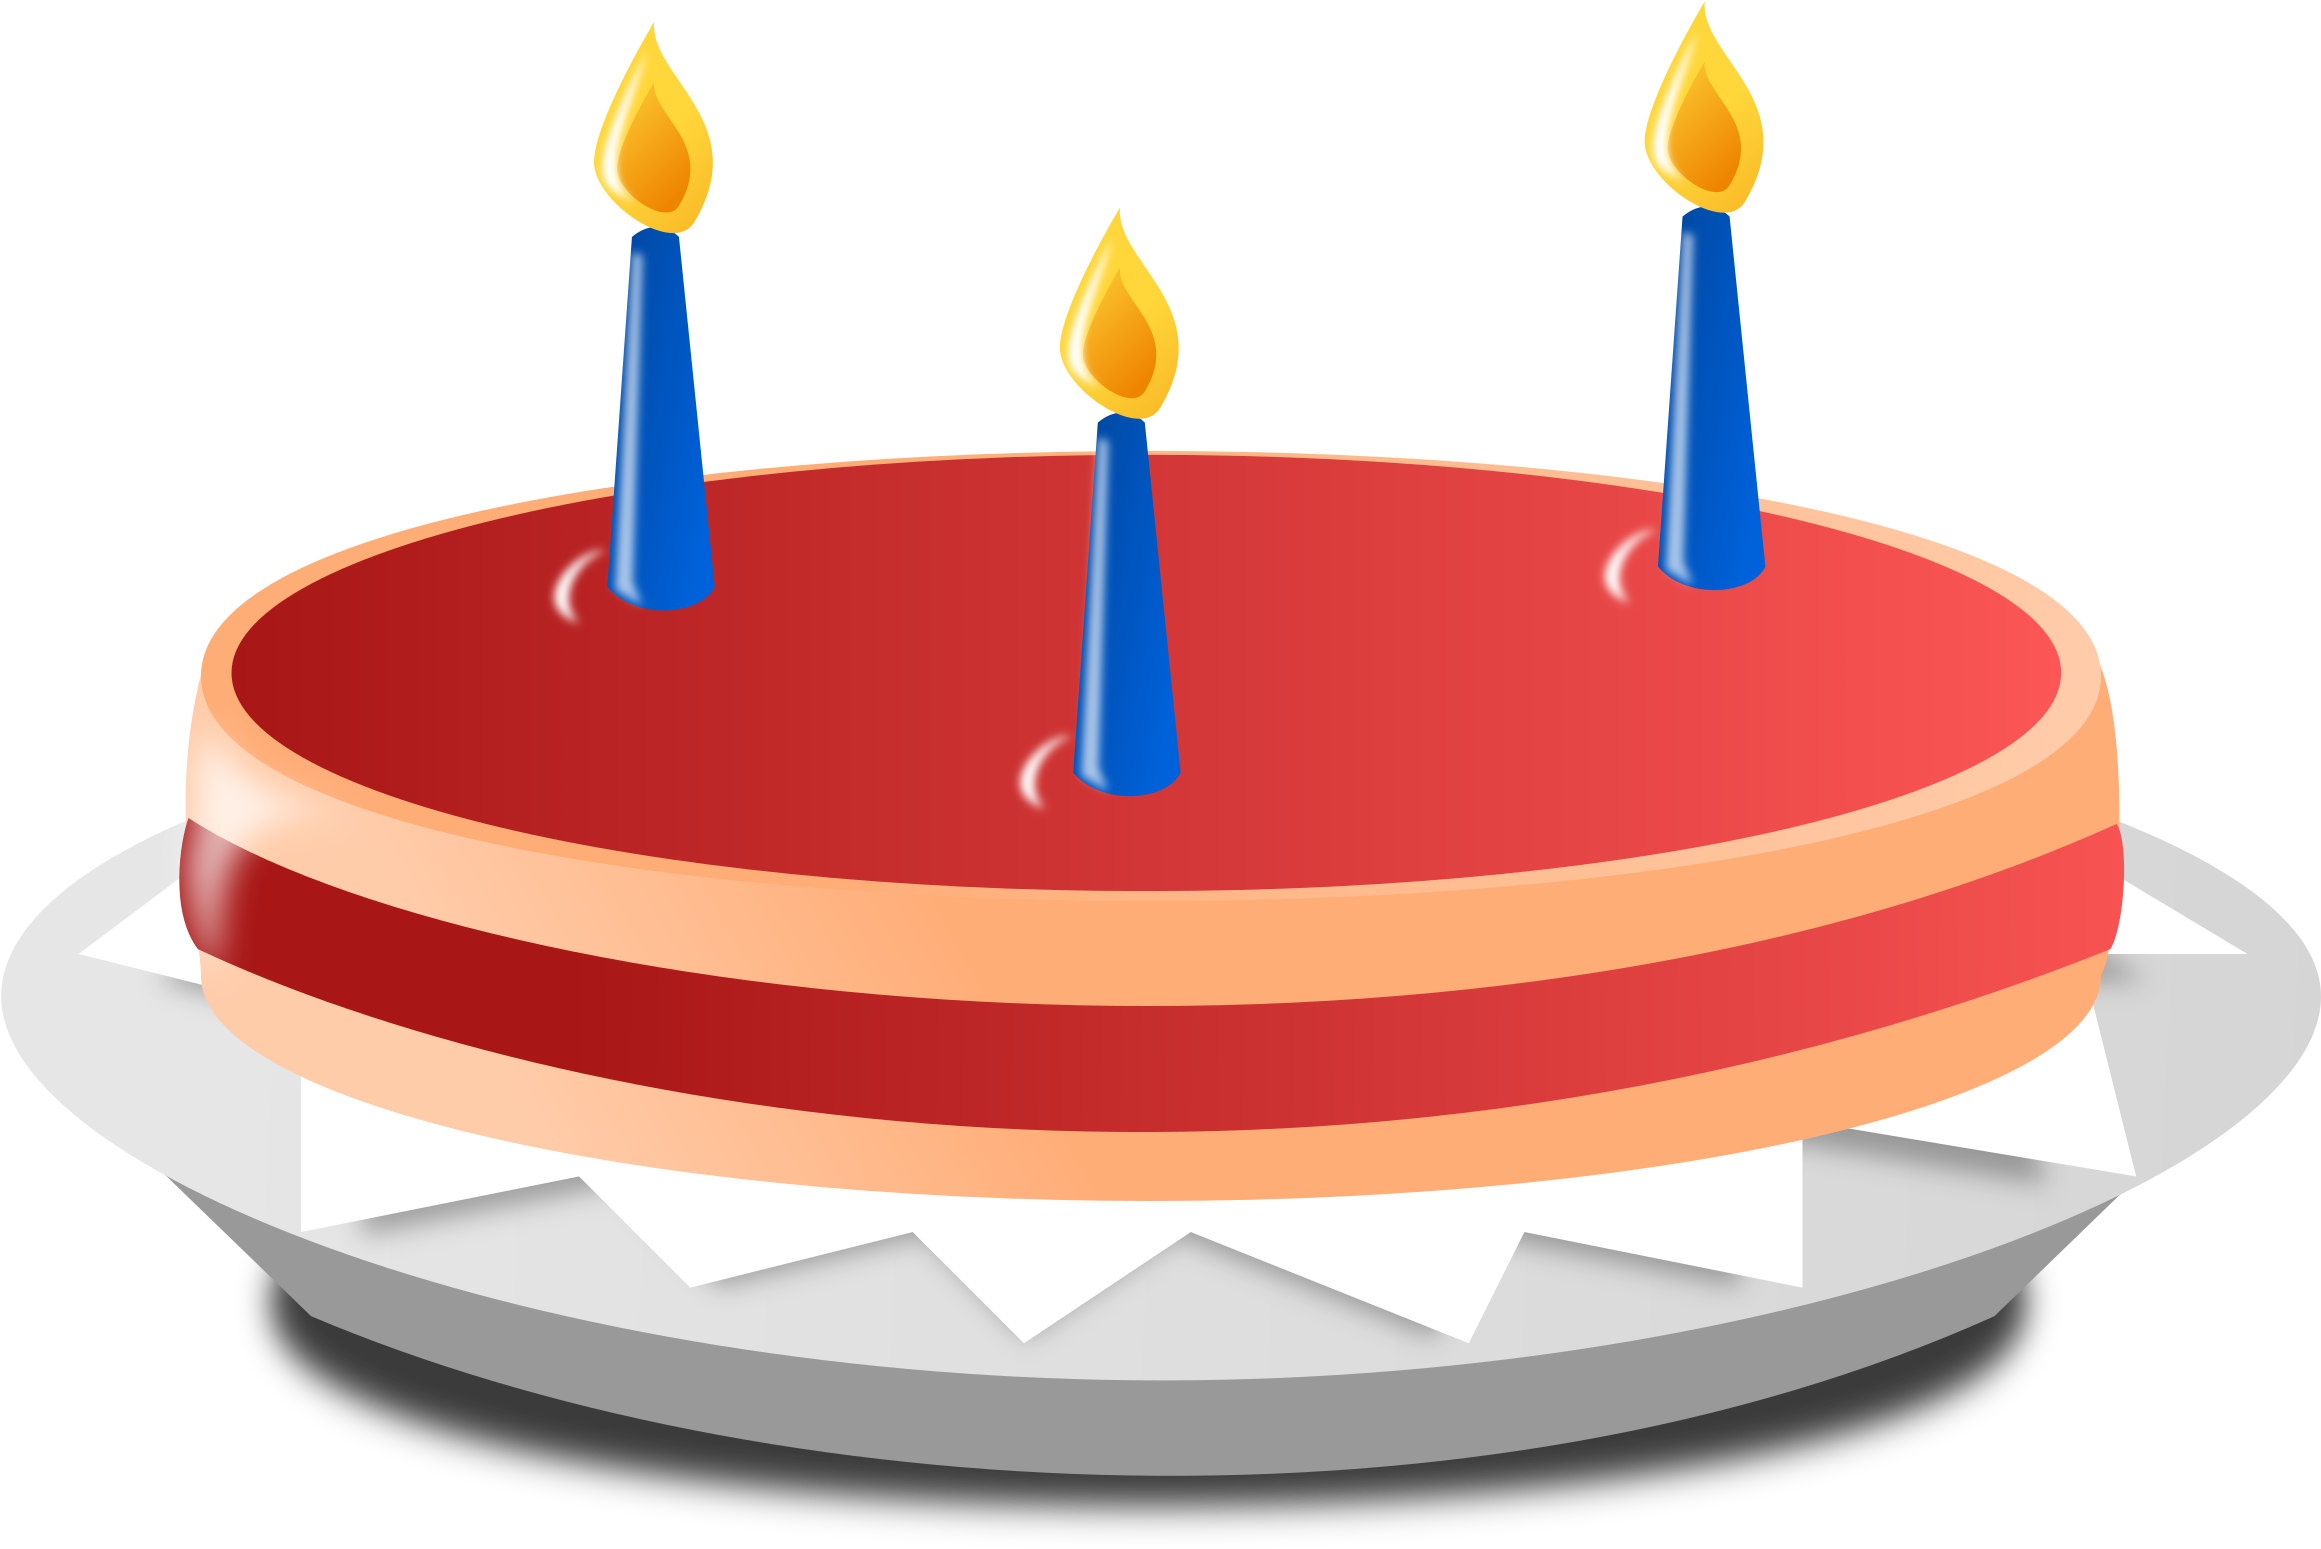 Birthday Cake Black And White Clip Art Free Download - Transparent Background Cartoon Birthday Cake (2400x2400)